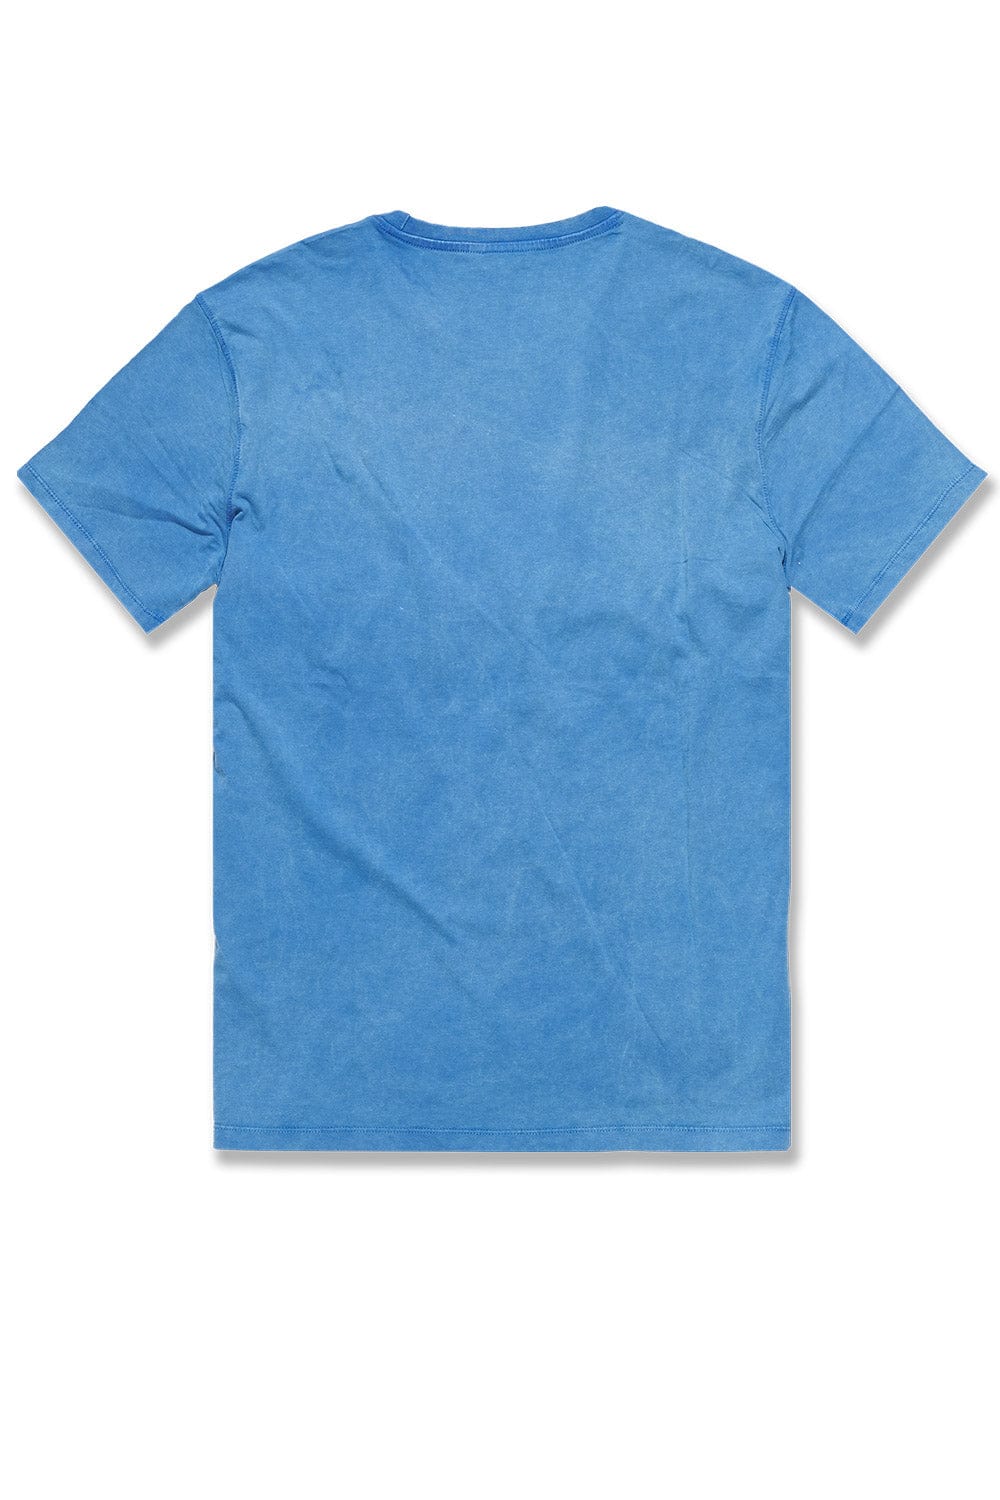 Jordan Craig Dream Team T-Shirt (Retro Blue)